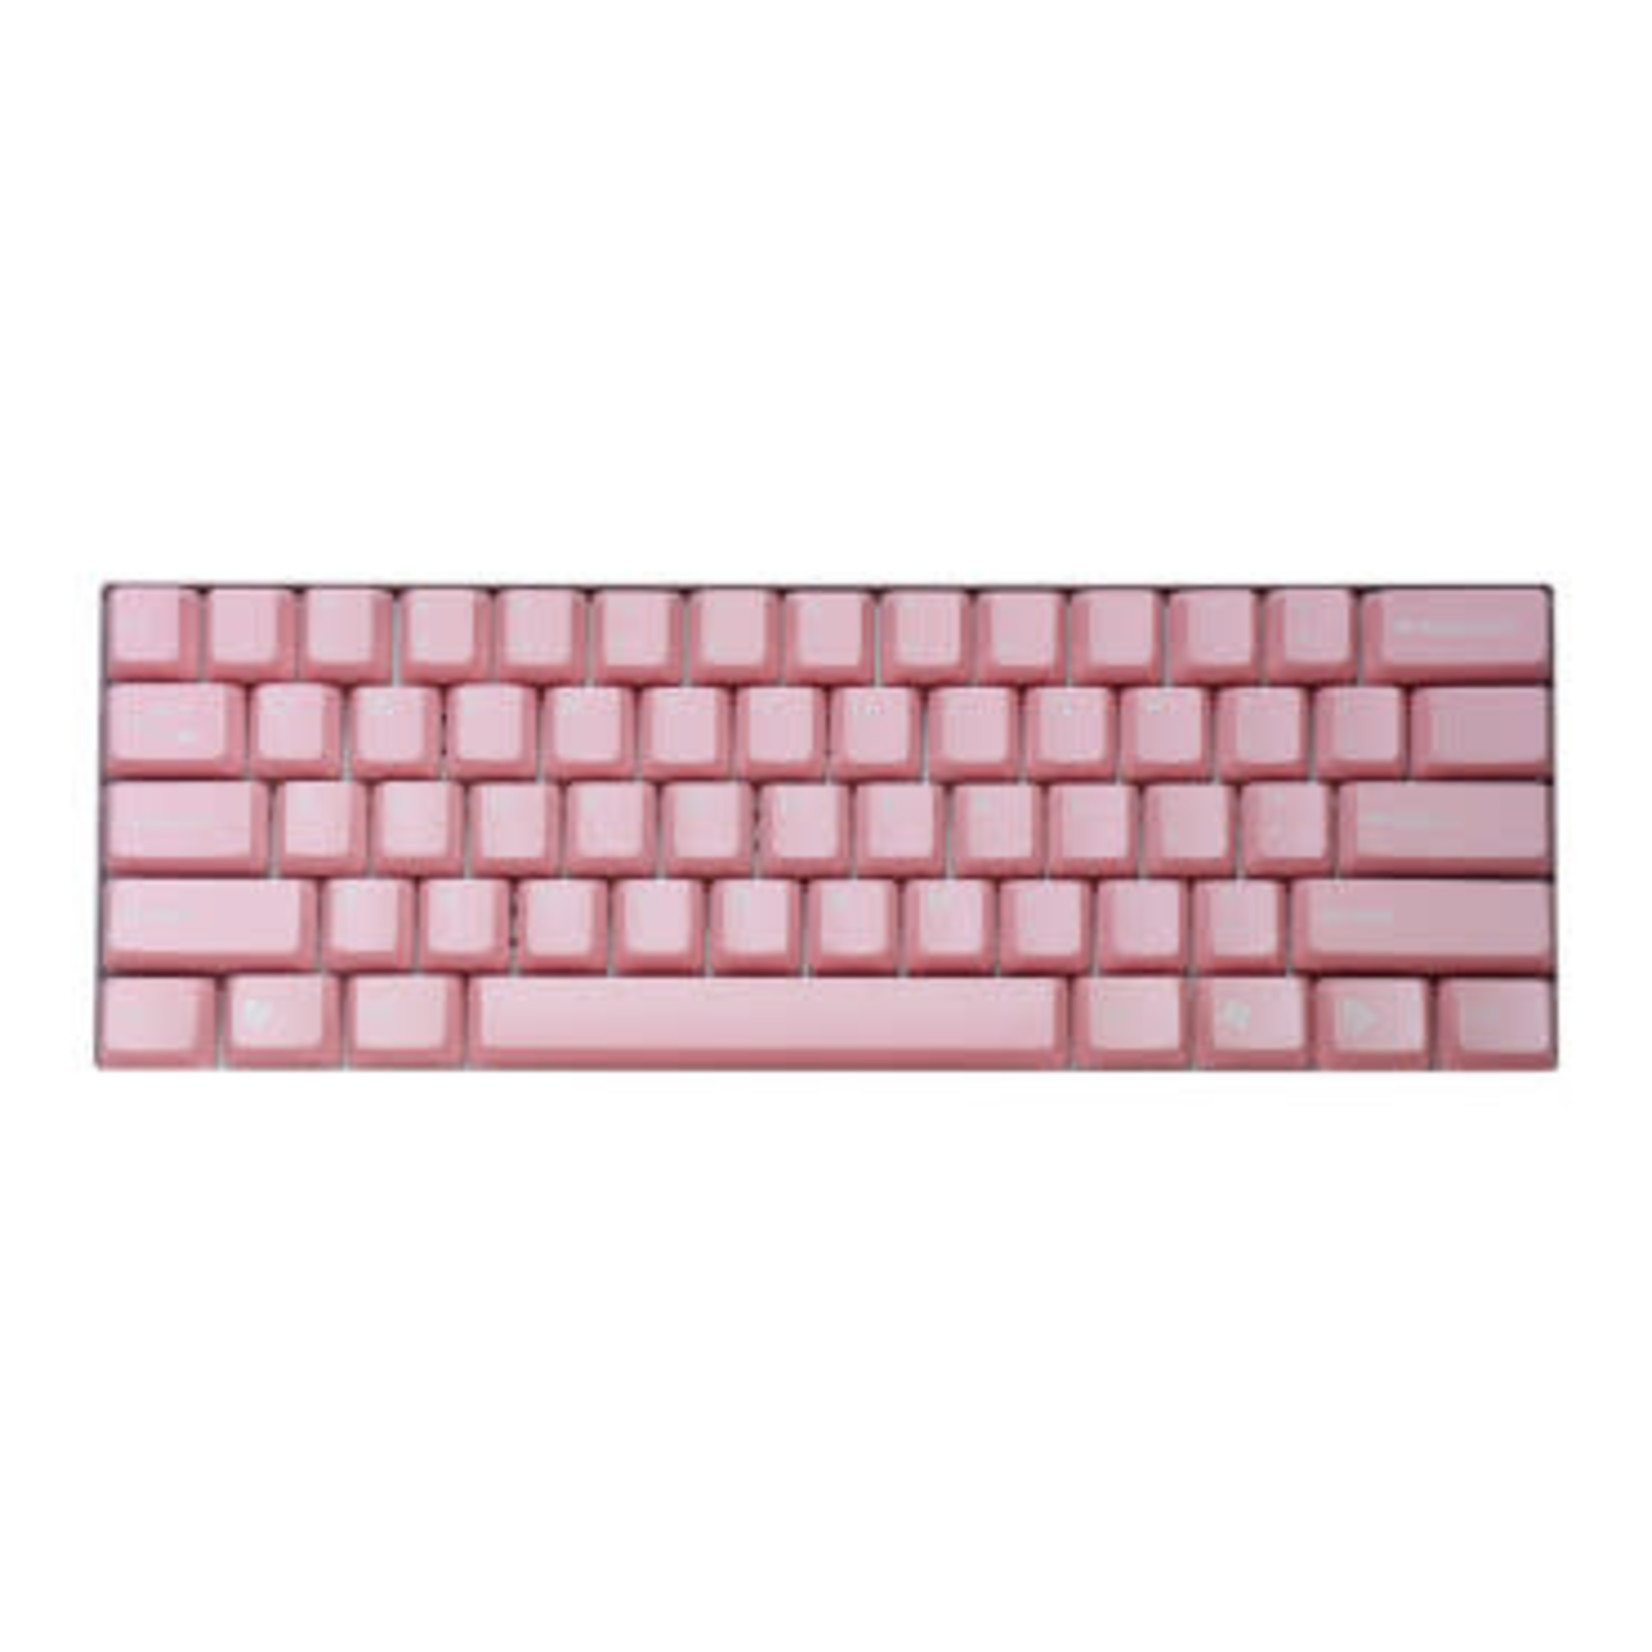 Tai-Hao Tai-Hao All Pink ABS Keycap Set